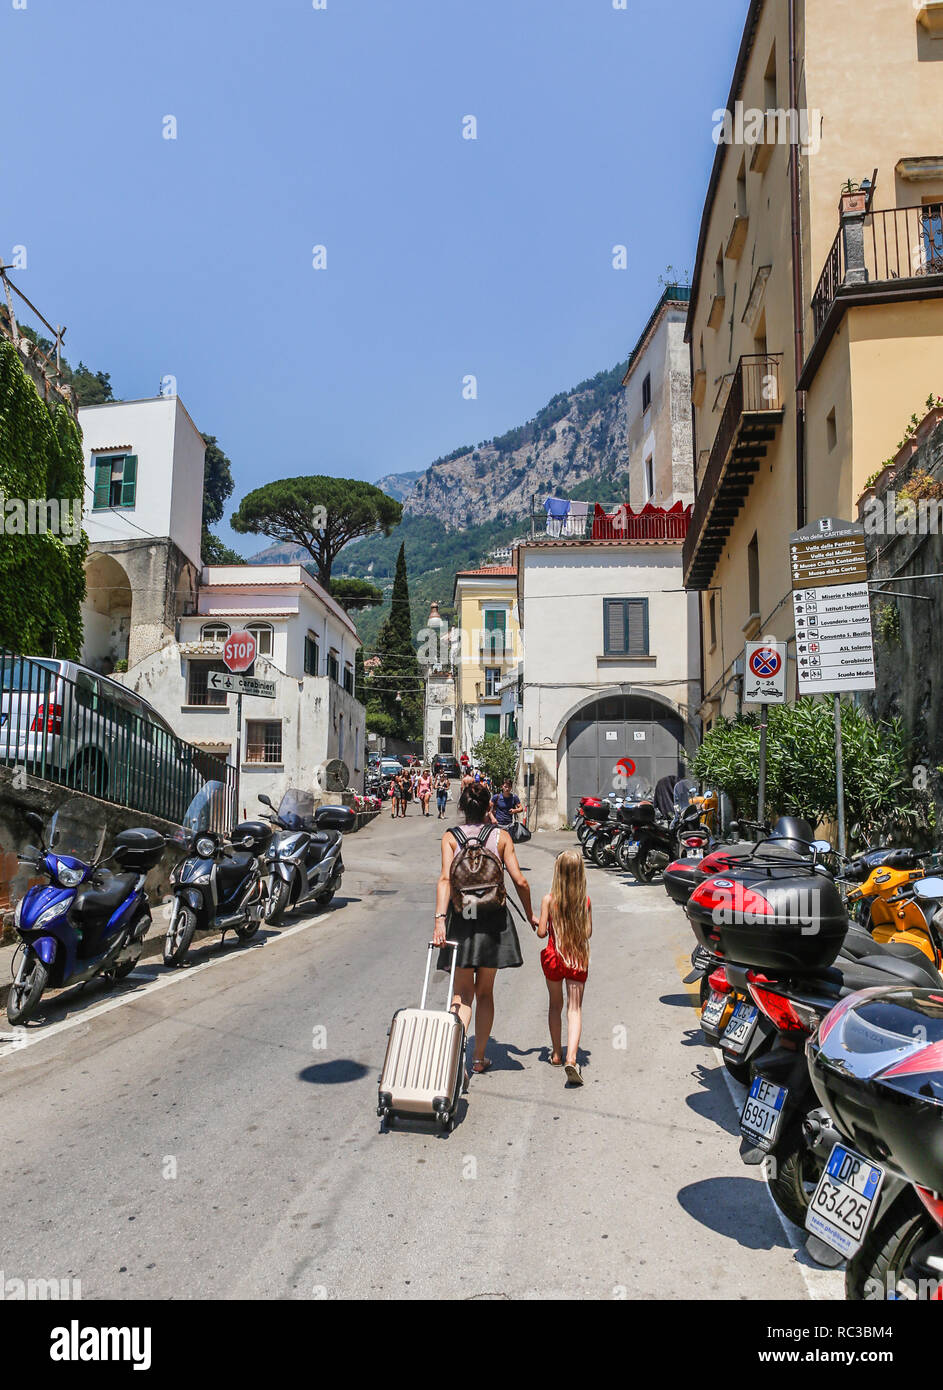 Street scene with street Via Cardinale Marino del Giudice and houses in the  picturesque Amalfi, on the wonderful Amalfi Coast, Italy Stock Photo - Alamy